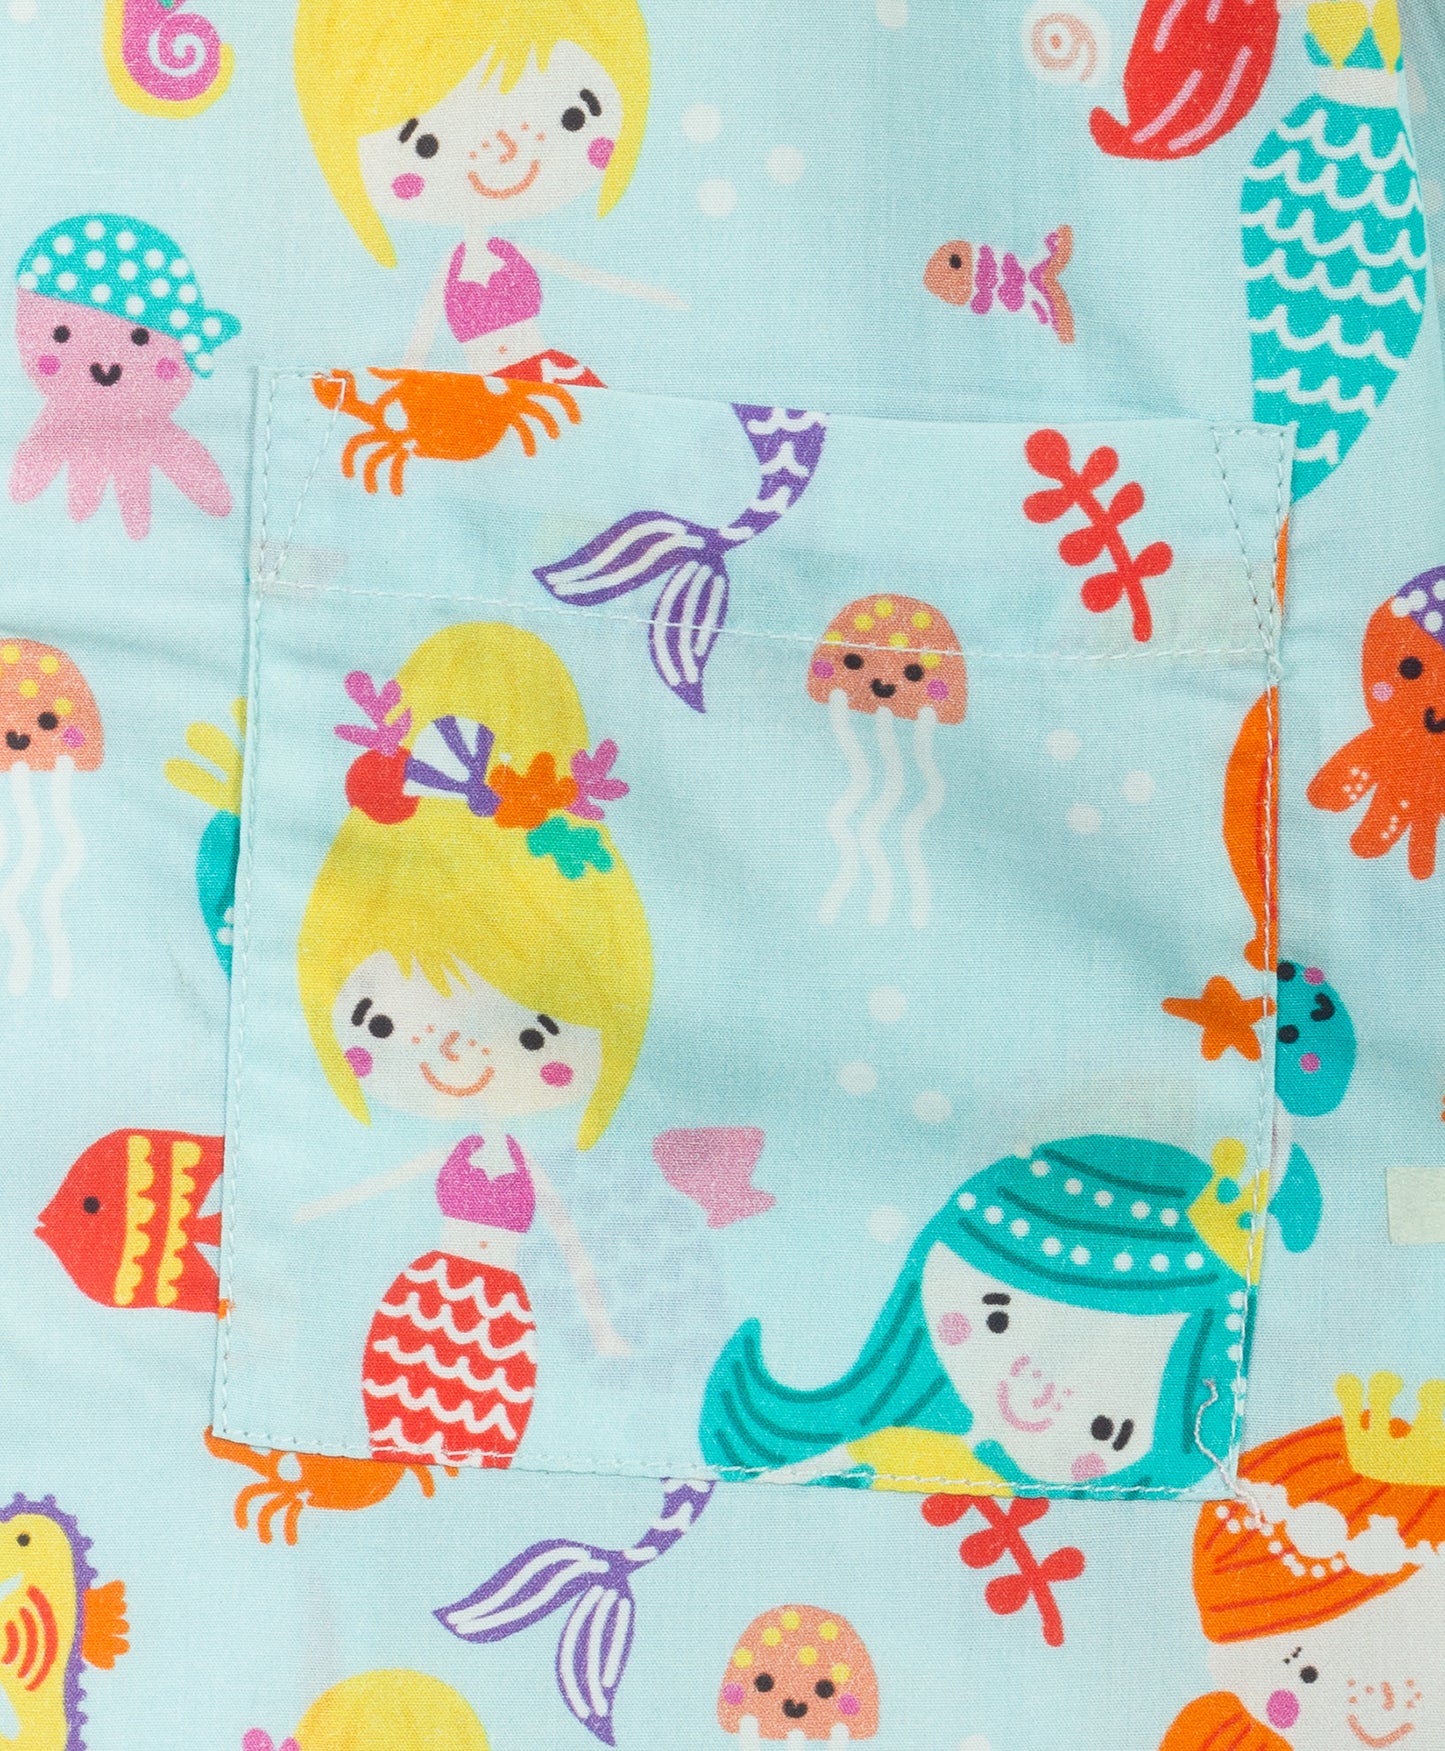 Mermaid and jellyfish print nightsuit